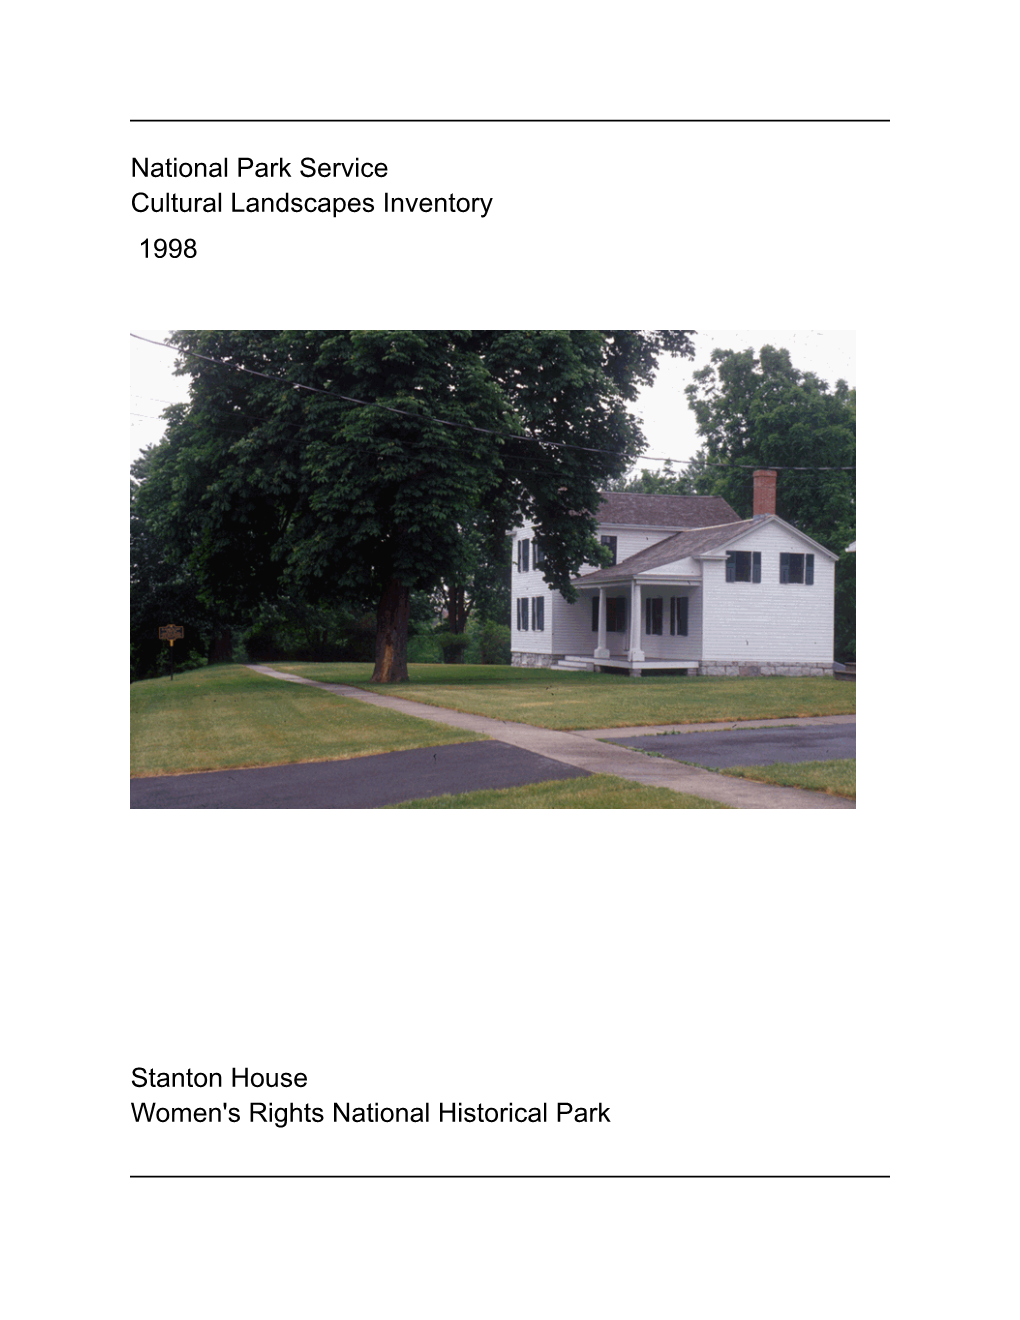 National Park Service Cultural Landscapes Inventory Stanton